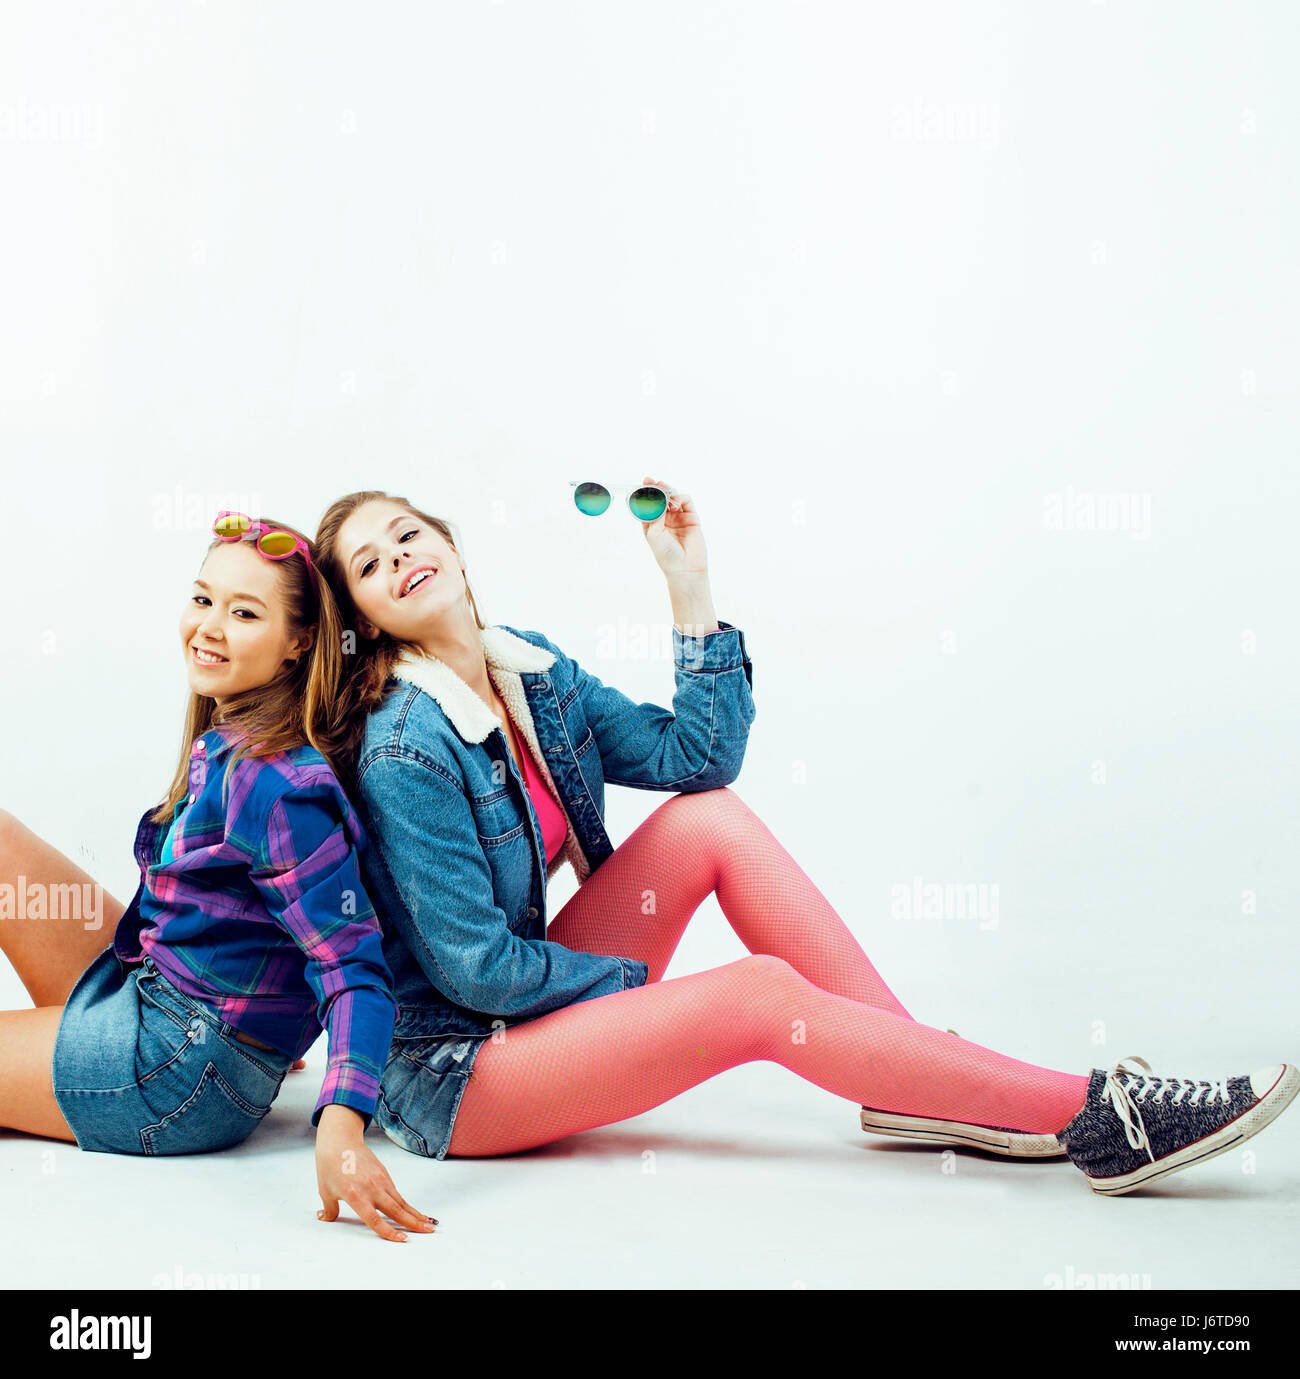 Two Best Friends Teenage Girls Together Having Fun, Posing Emoti Stock  Image - Image of portrait, friendship: 119251455